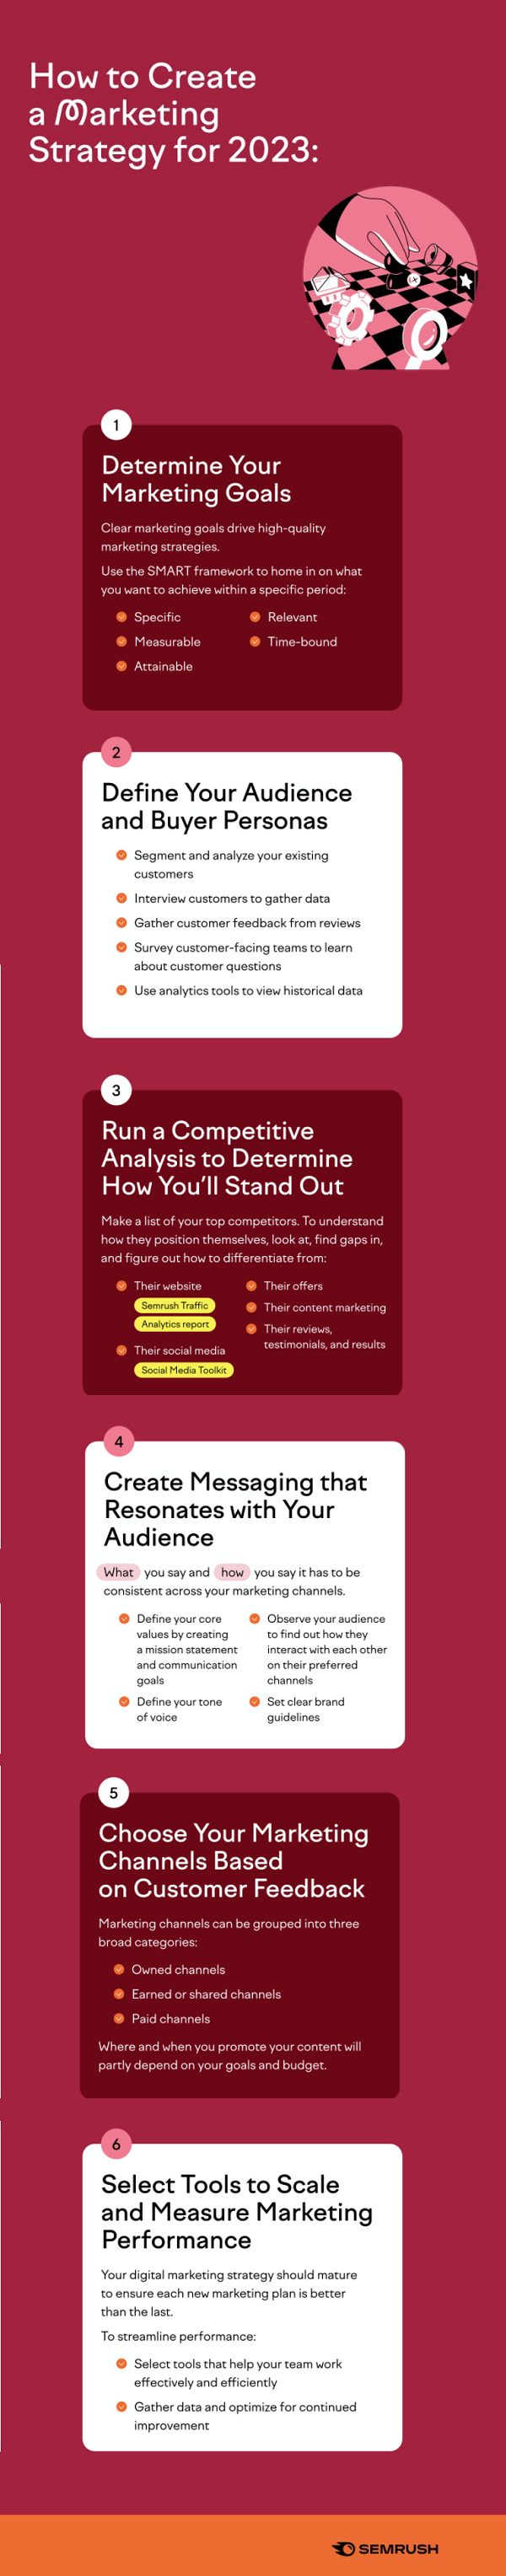 SEMRush marketing strategy guide